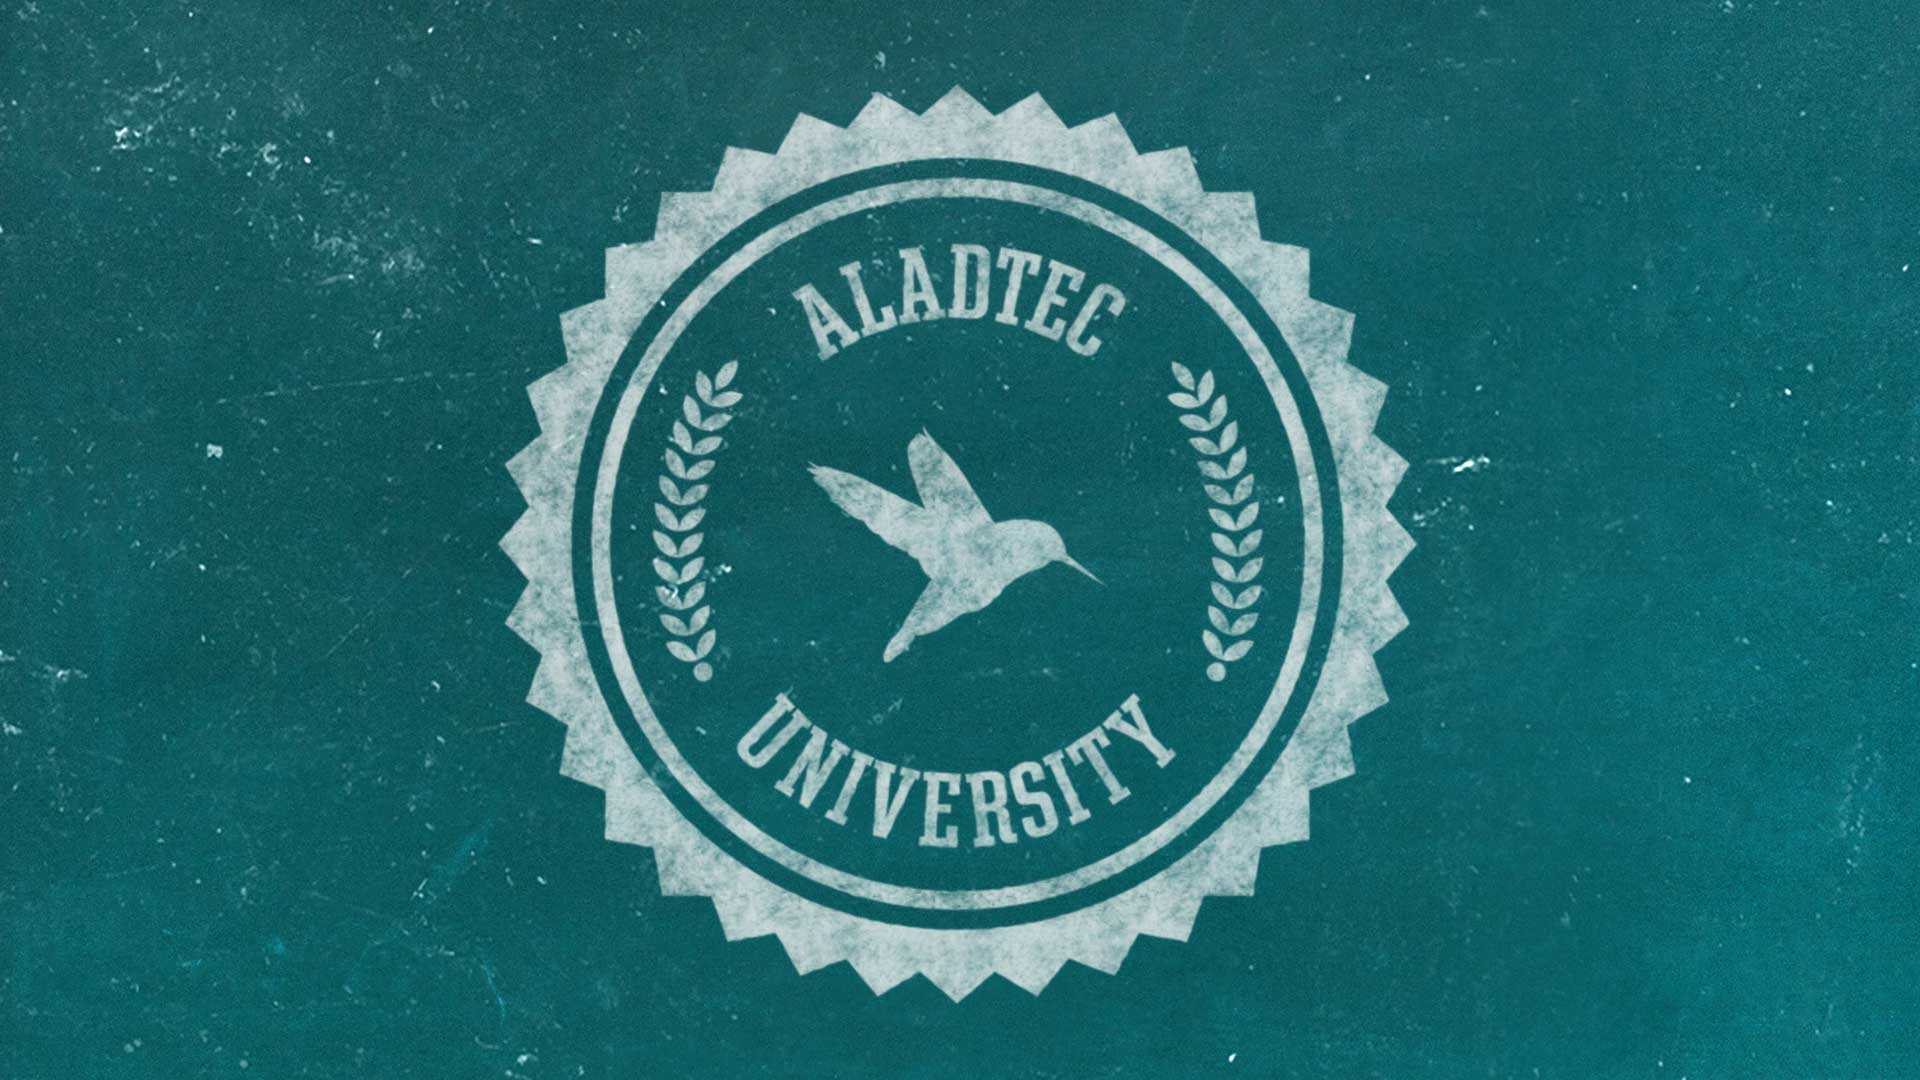 Aladtec U logo on a chalkboard